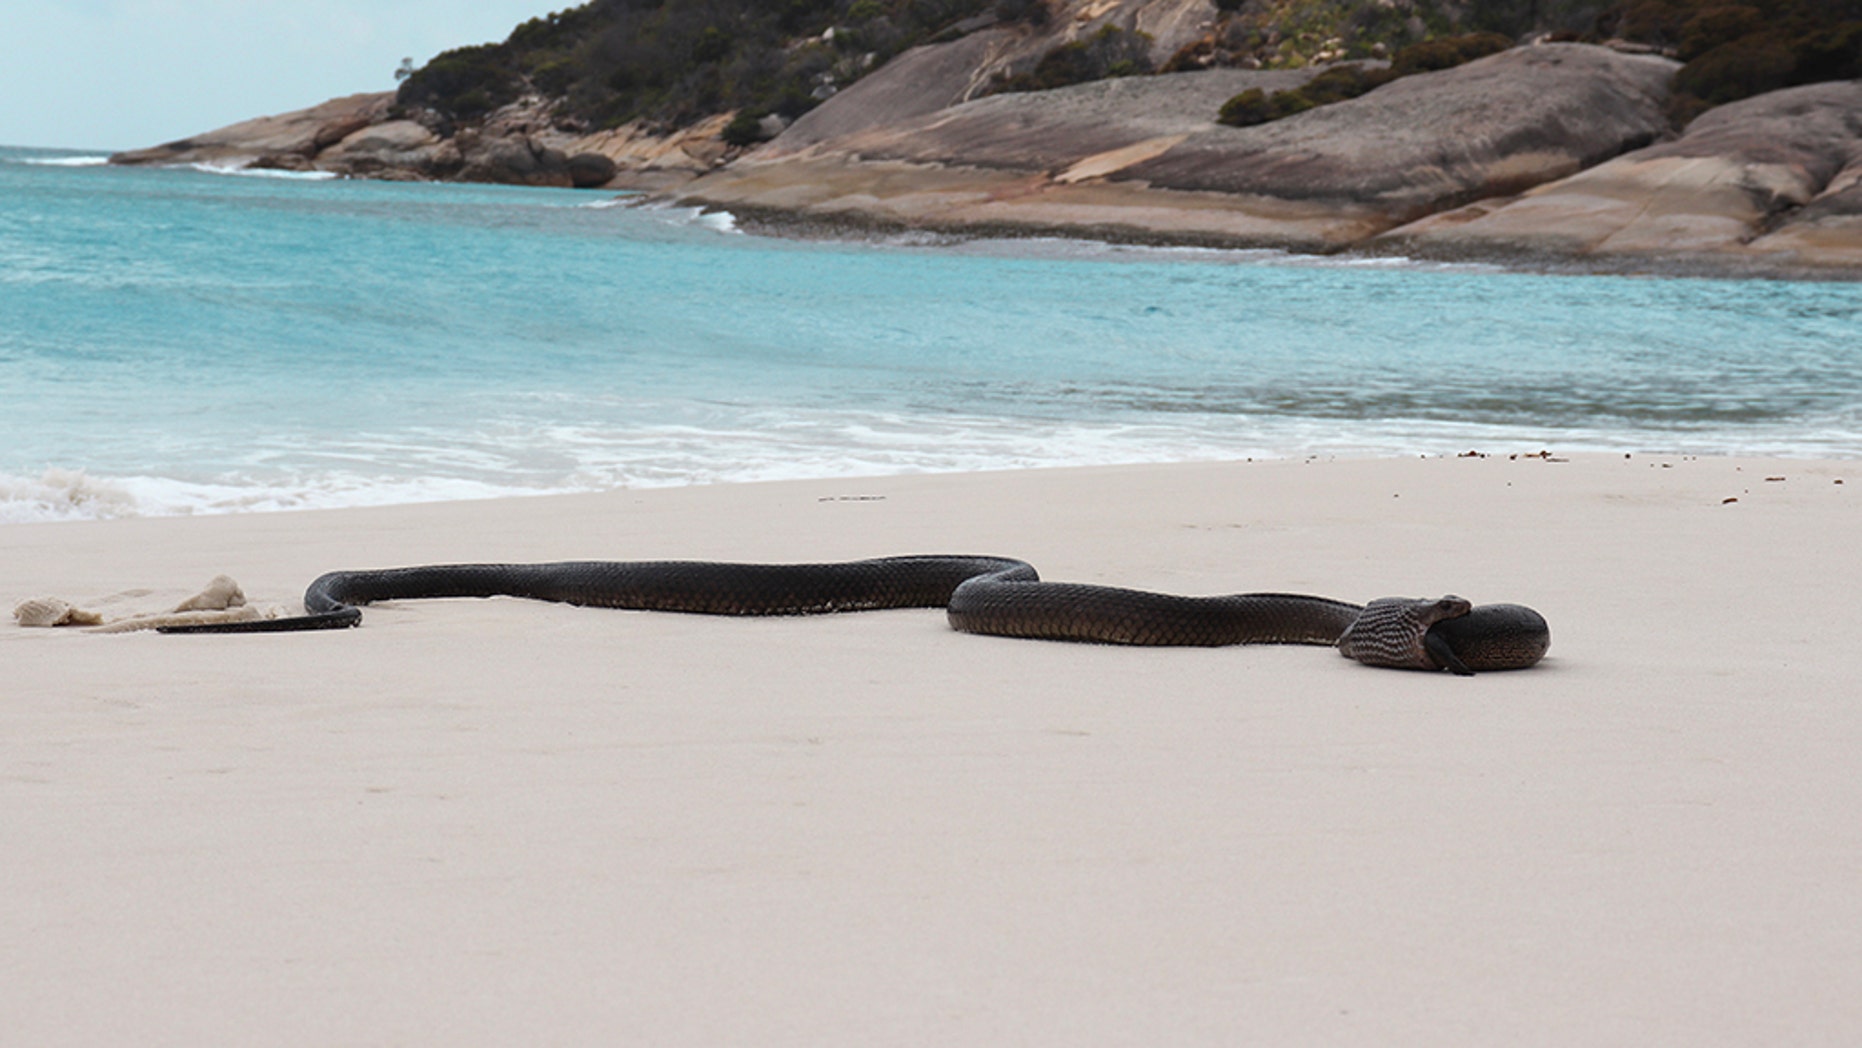 Deadly snake spotted devouring huge lizard on Australian beach